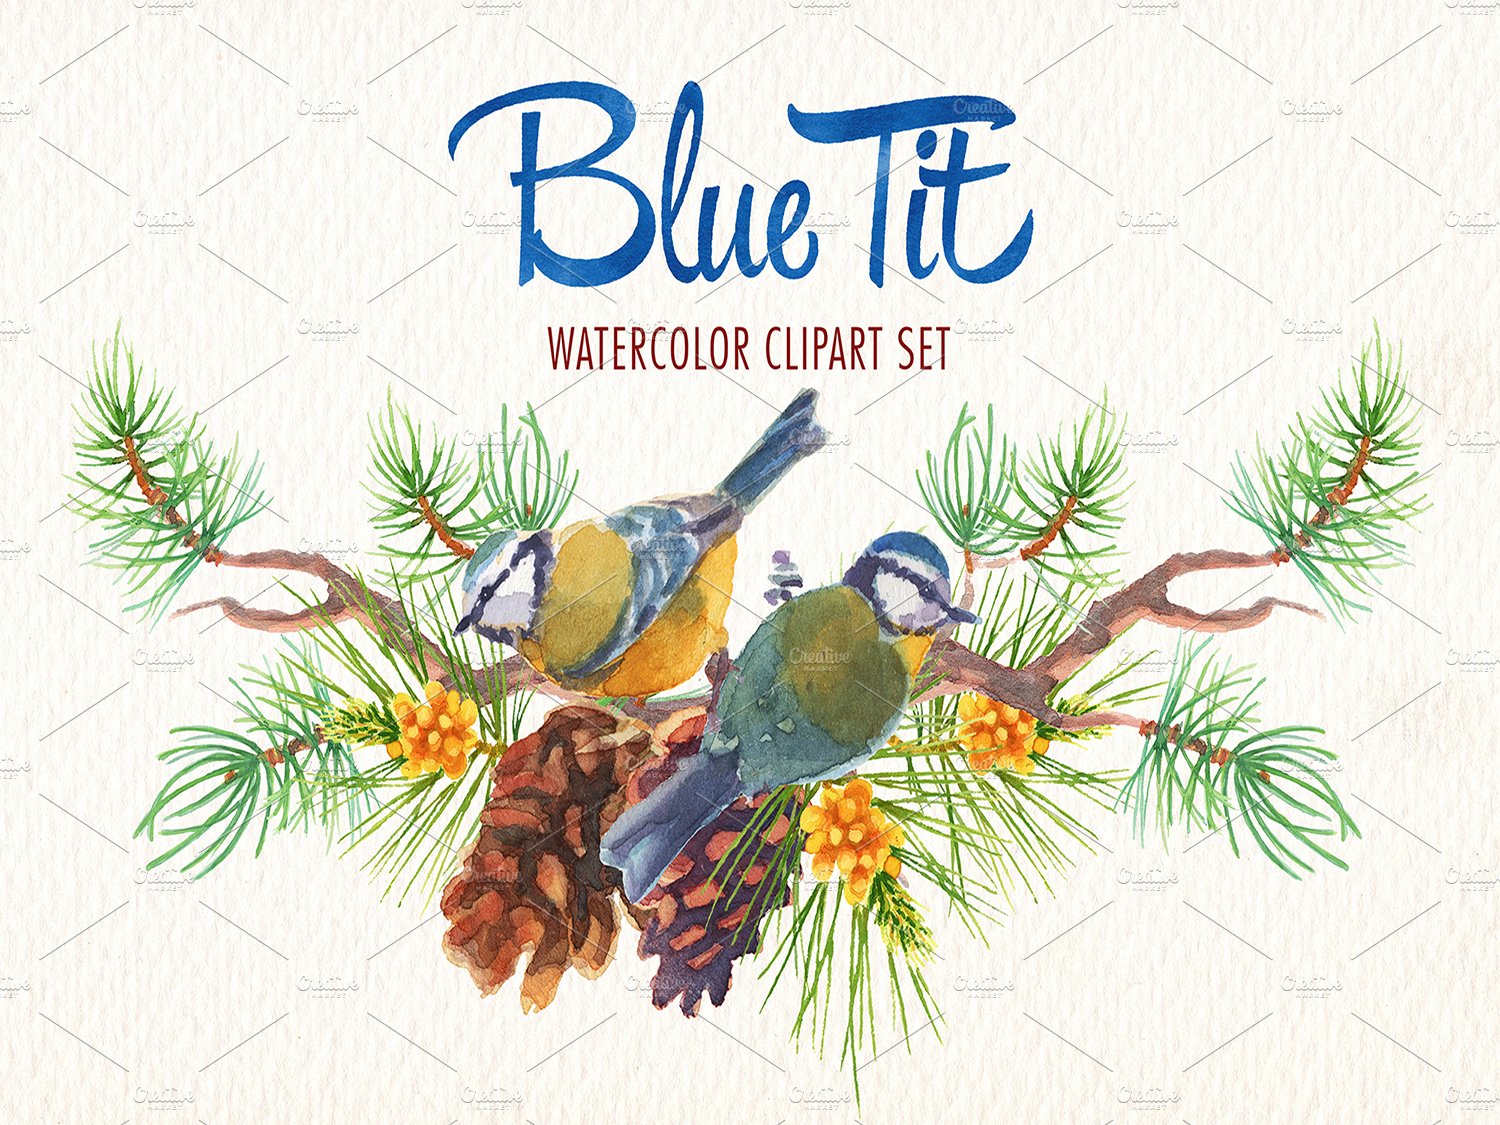 Watercolor blue tit bird clipart preview image.